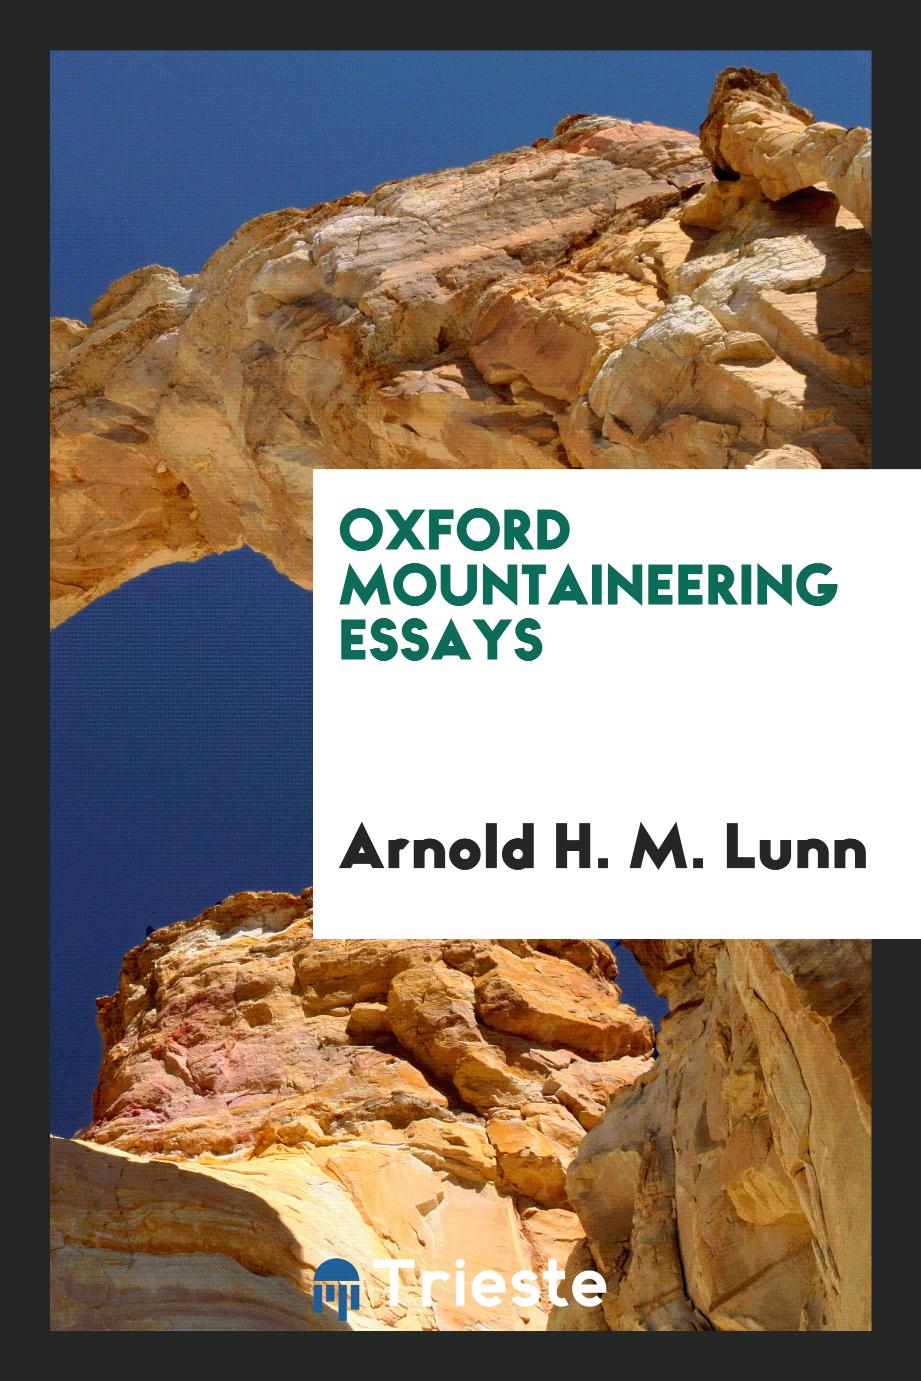 Oxford mountaineering essays